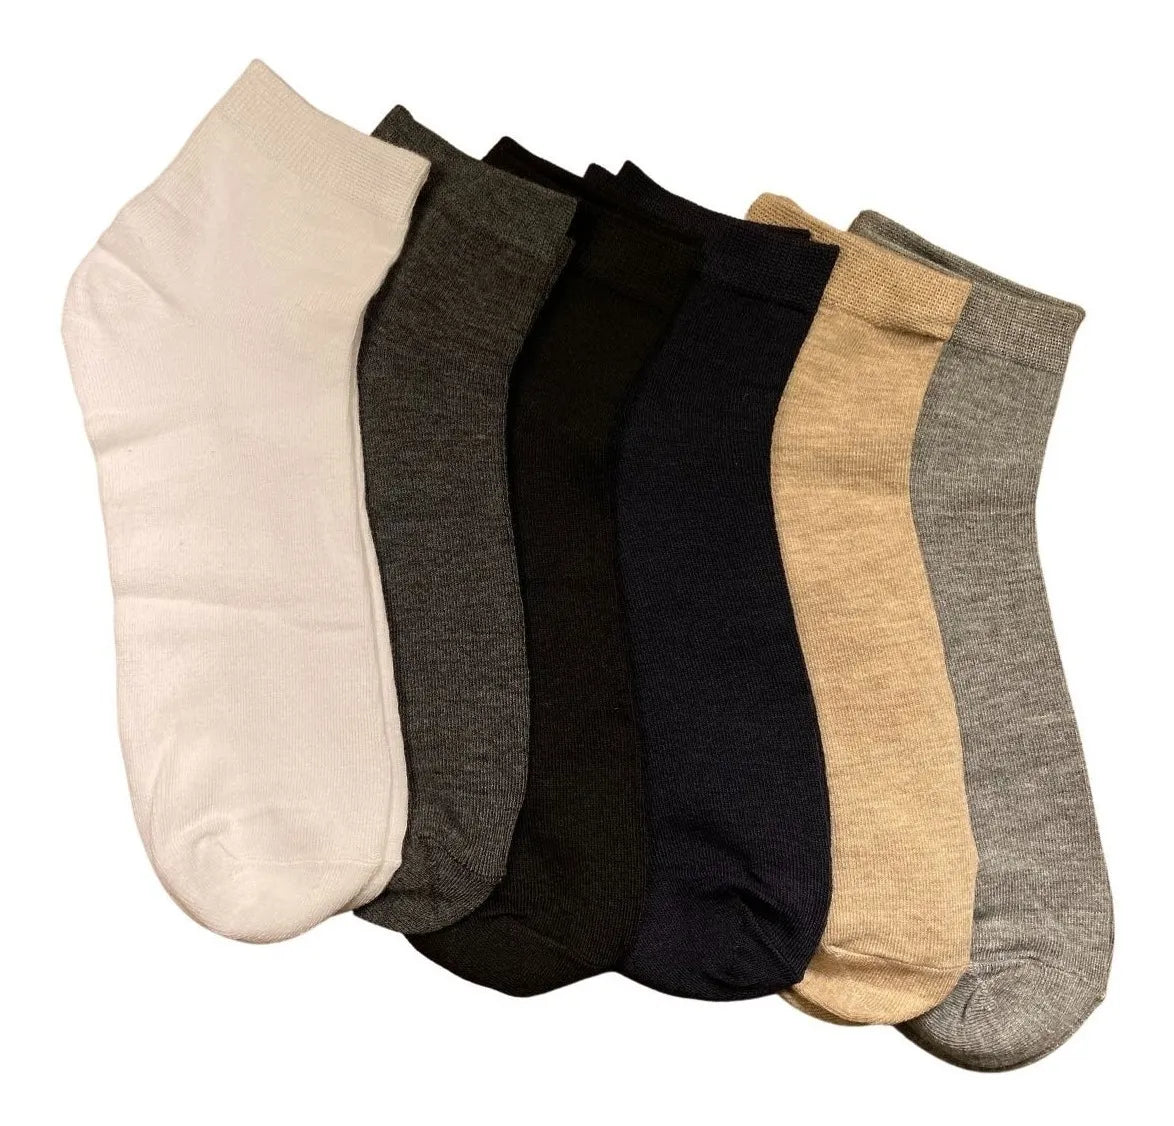 Calcetines cortos lisos (12 pares) – racotex